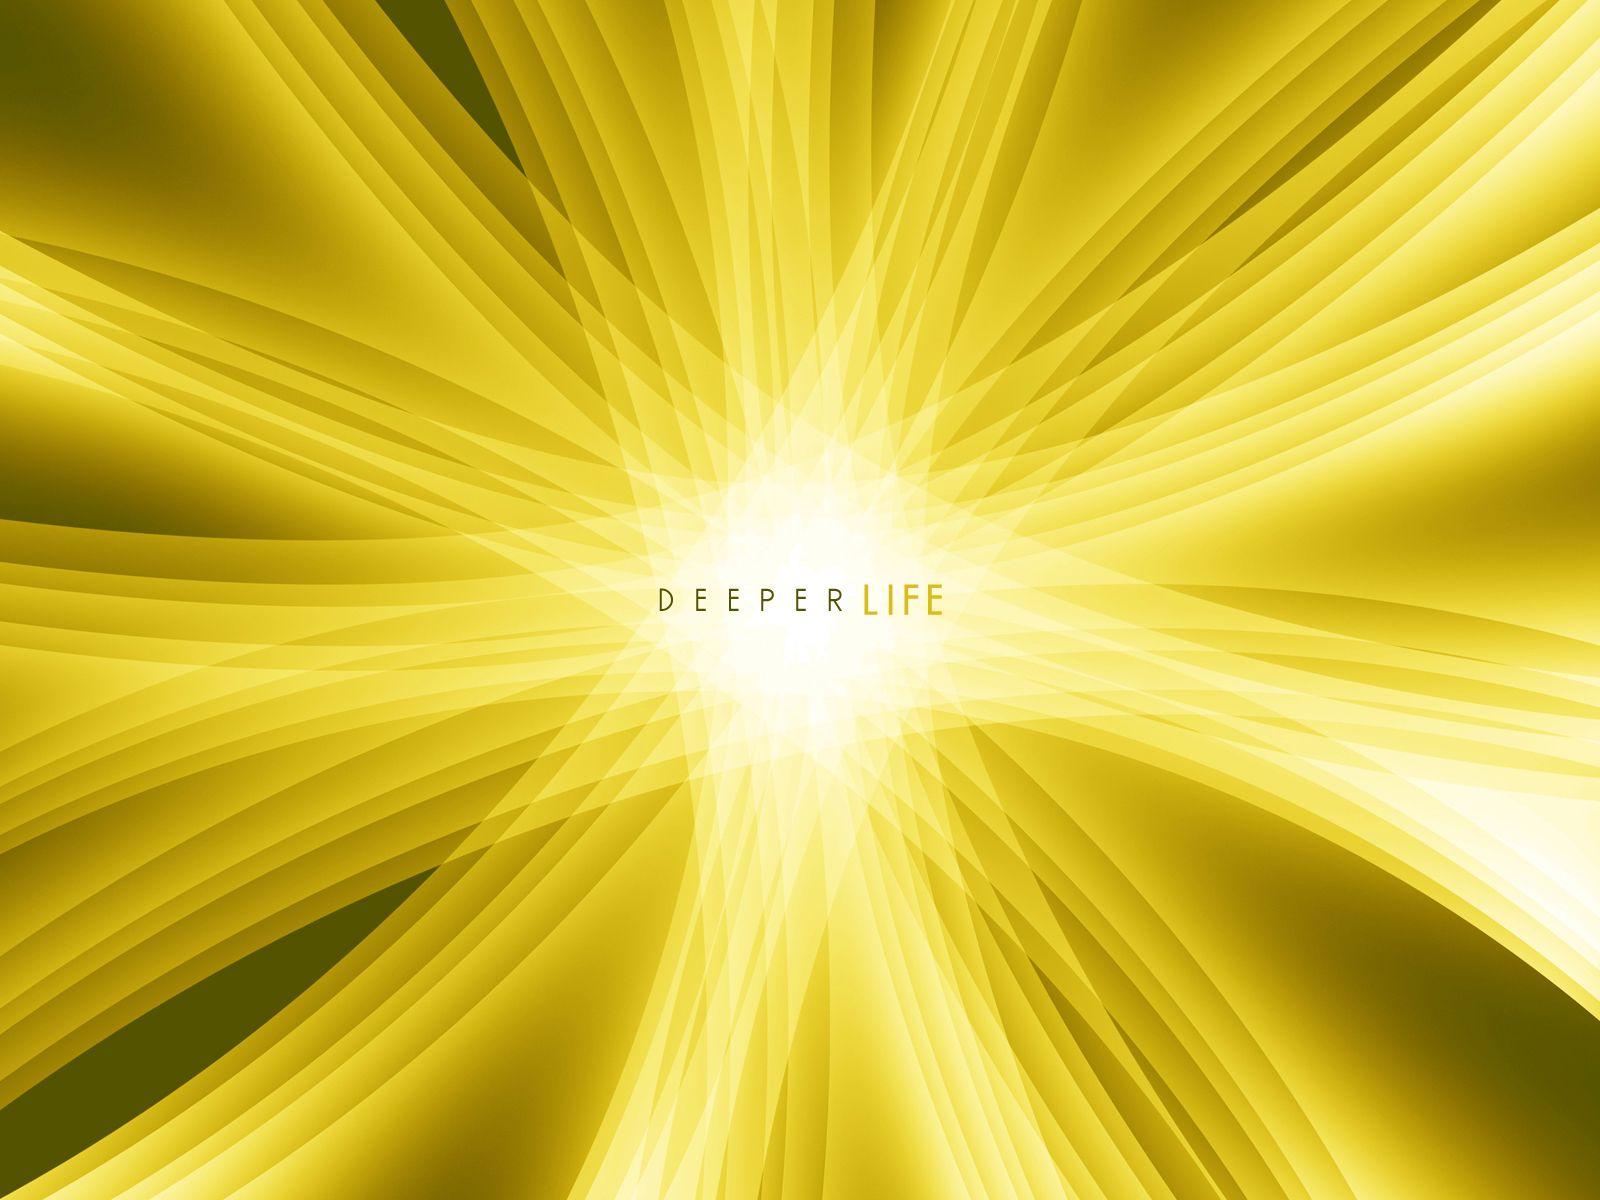 Deeper Life Yellow